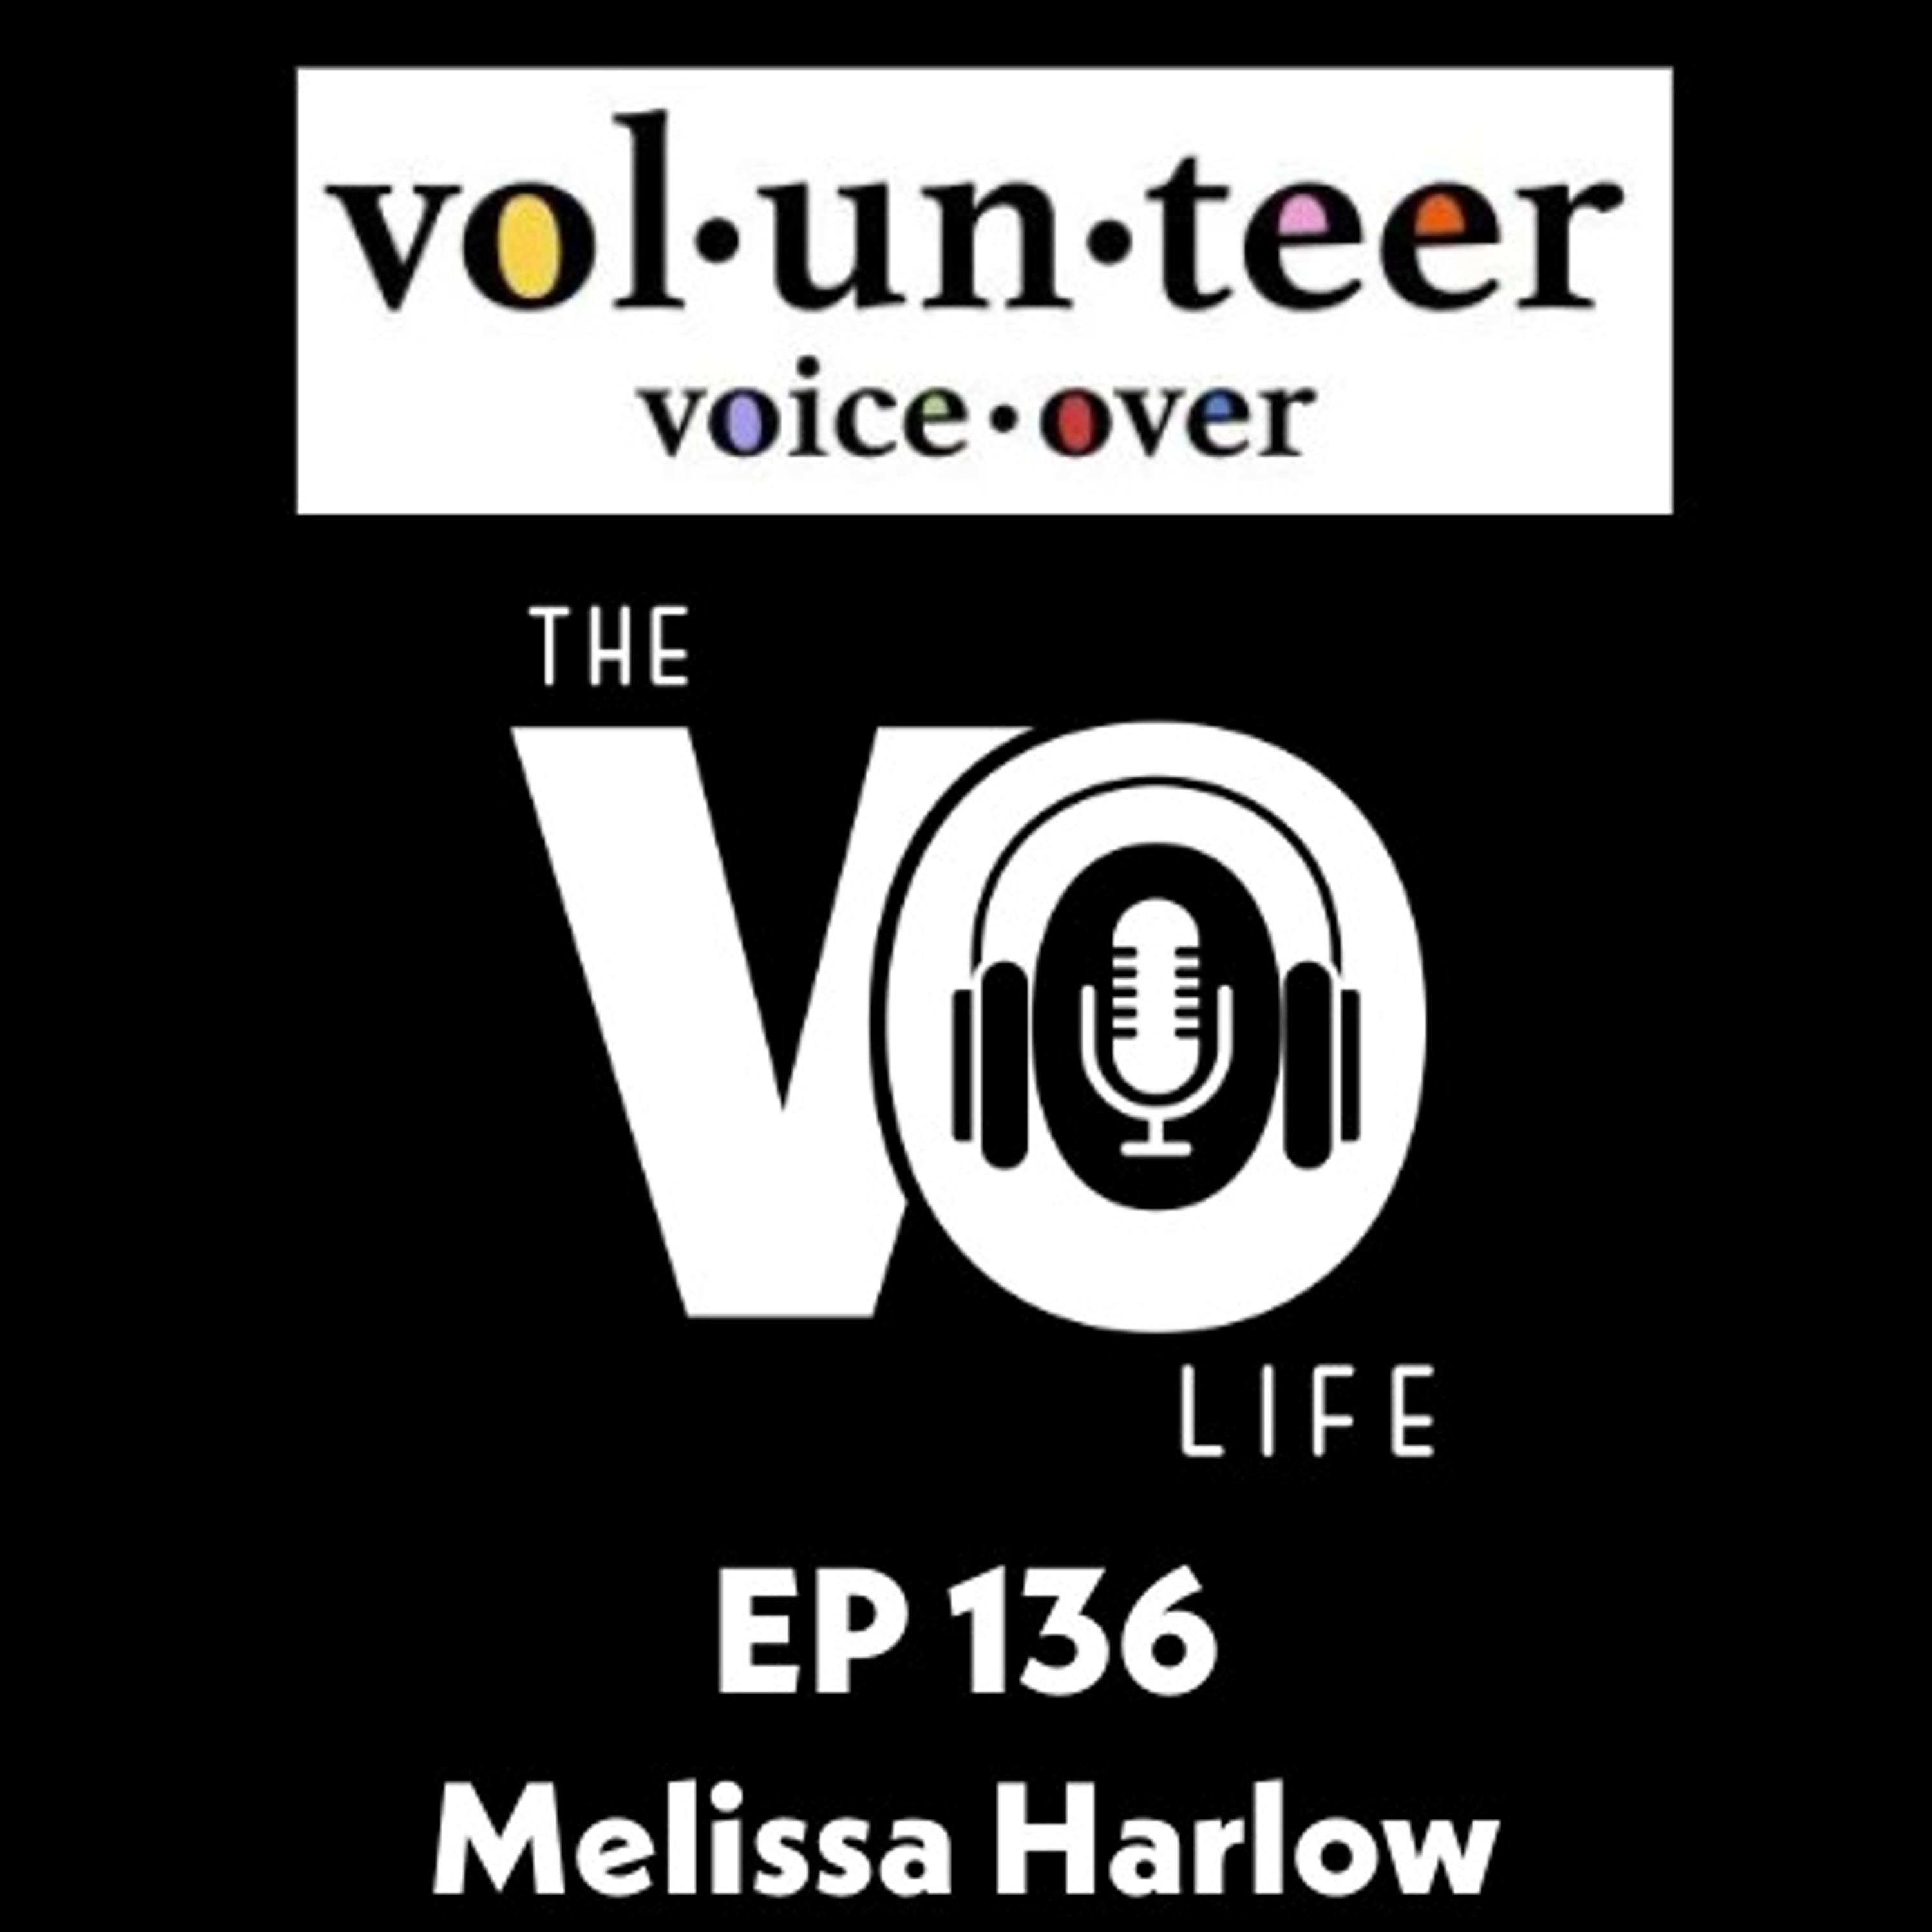 EP 136 - Volunteer VO with Melissa Harlow